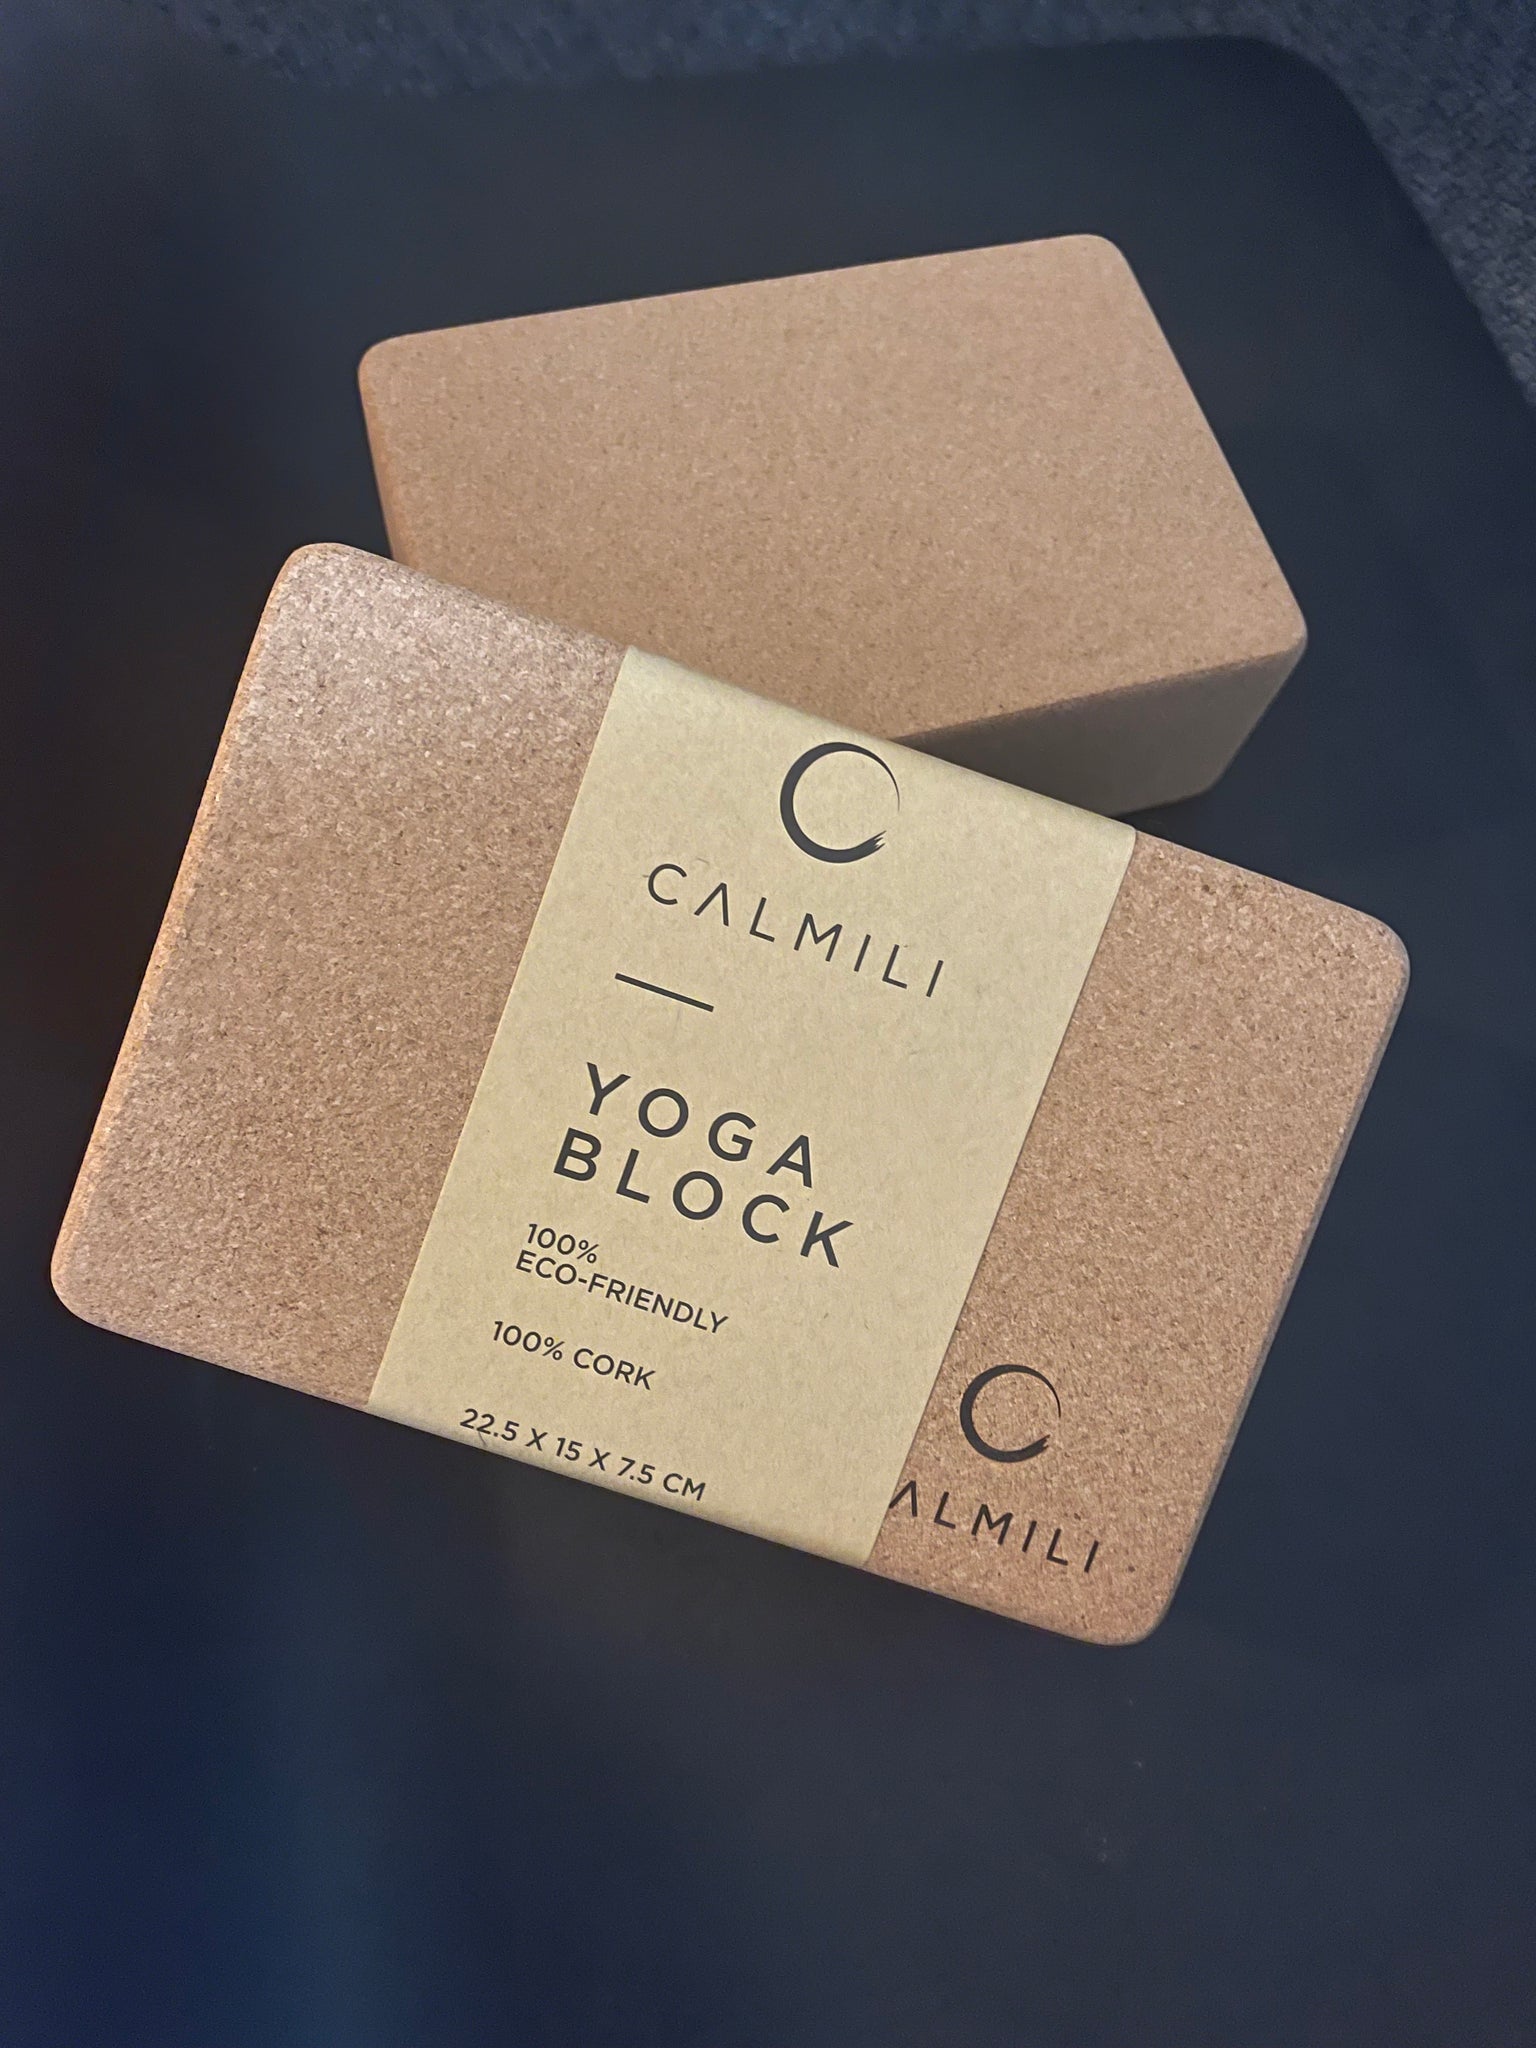 Yoga blocks- set of 2, 100% cork, sustainable